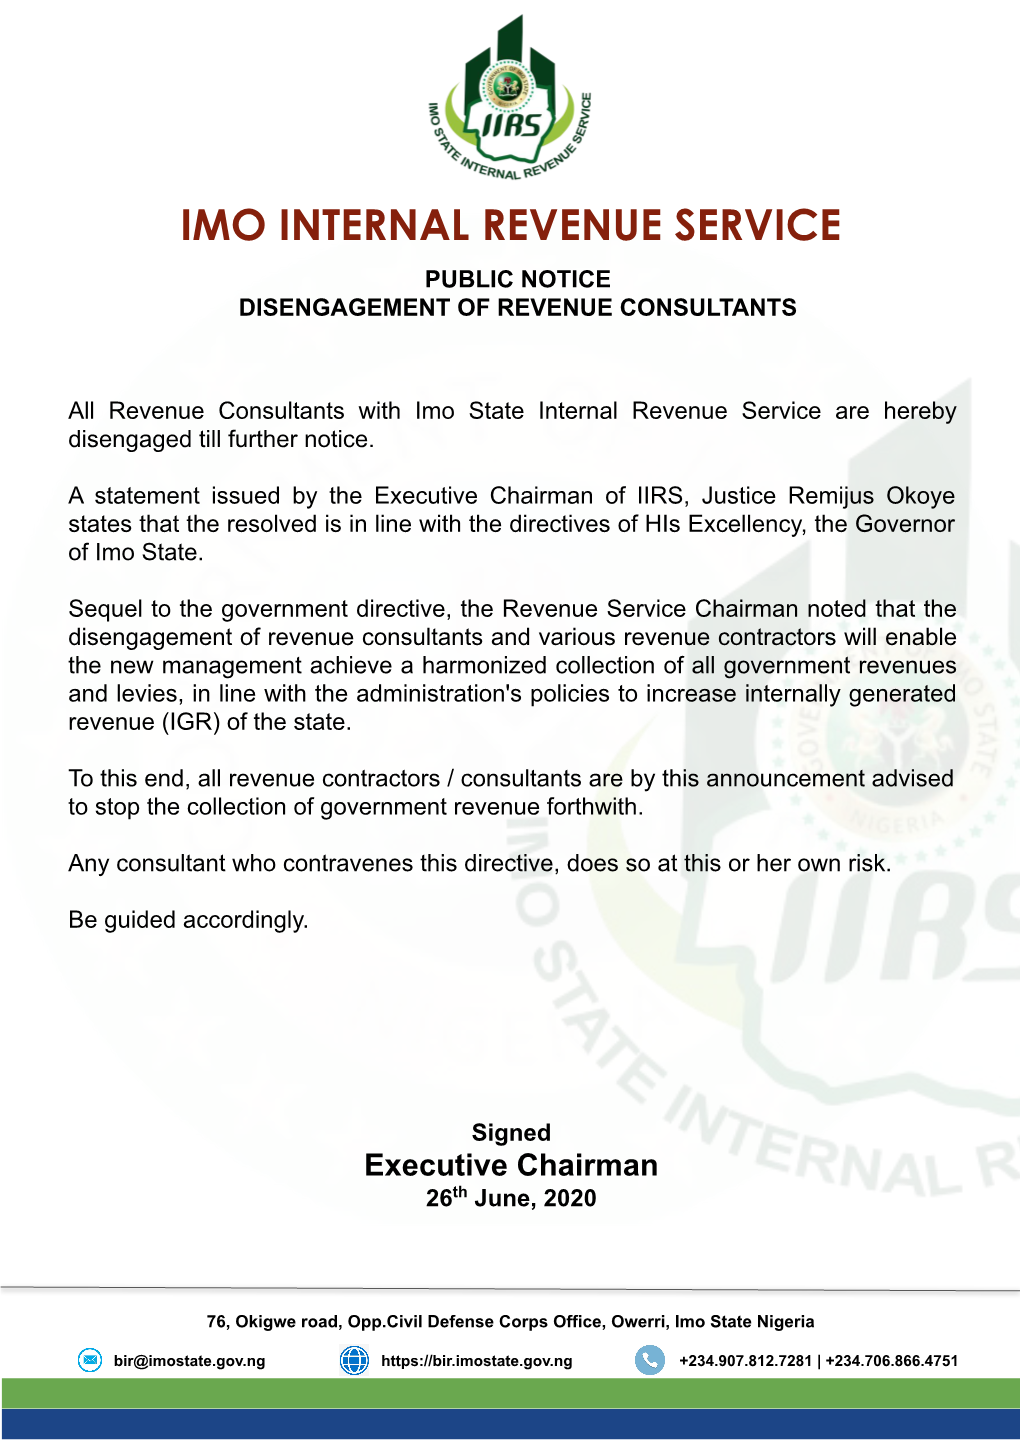 Imo Internal Revenue Service Public Notice Disengagement of Revenue Consultants